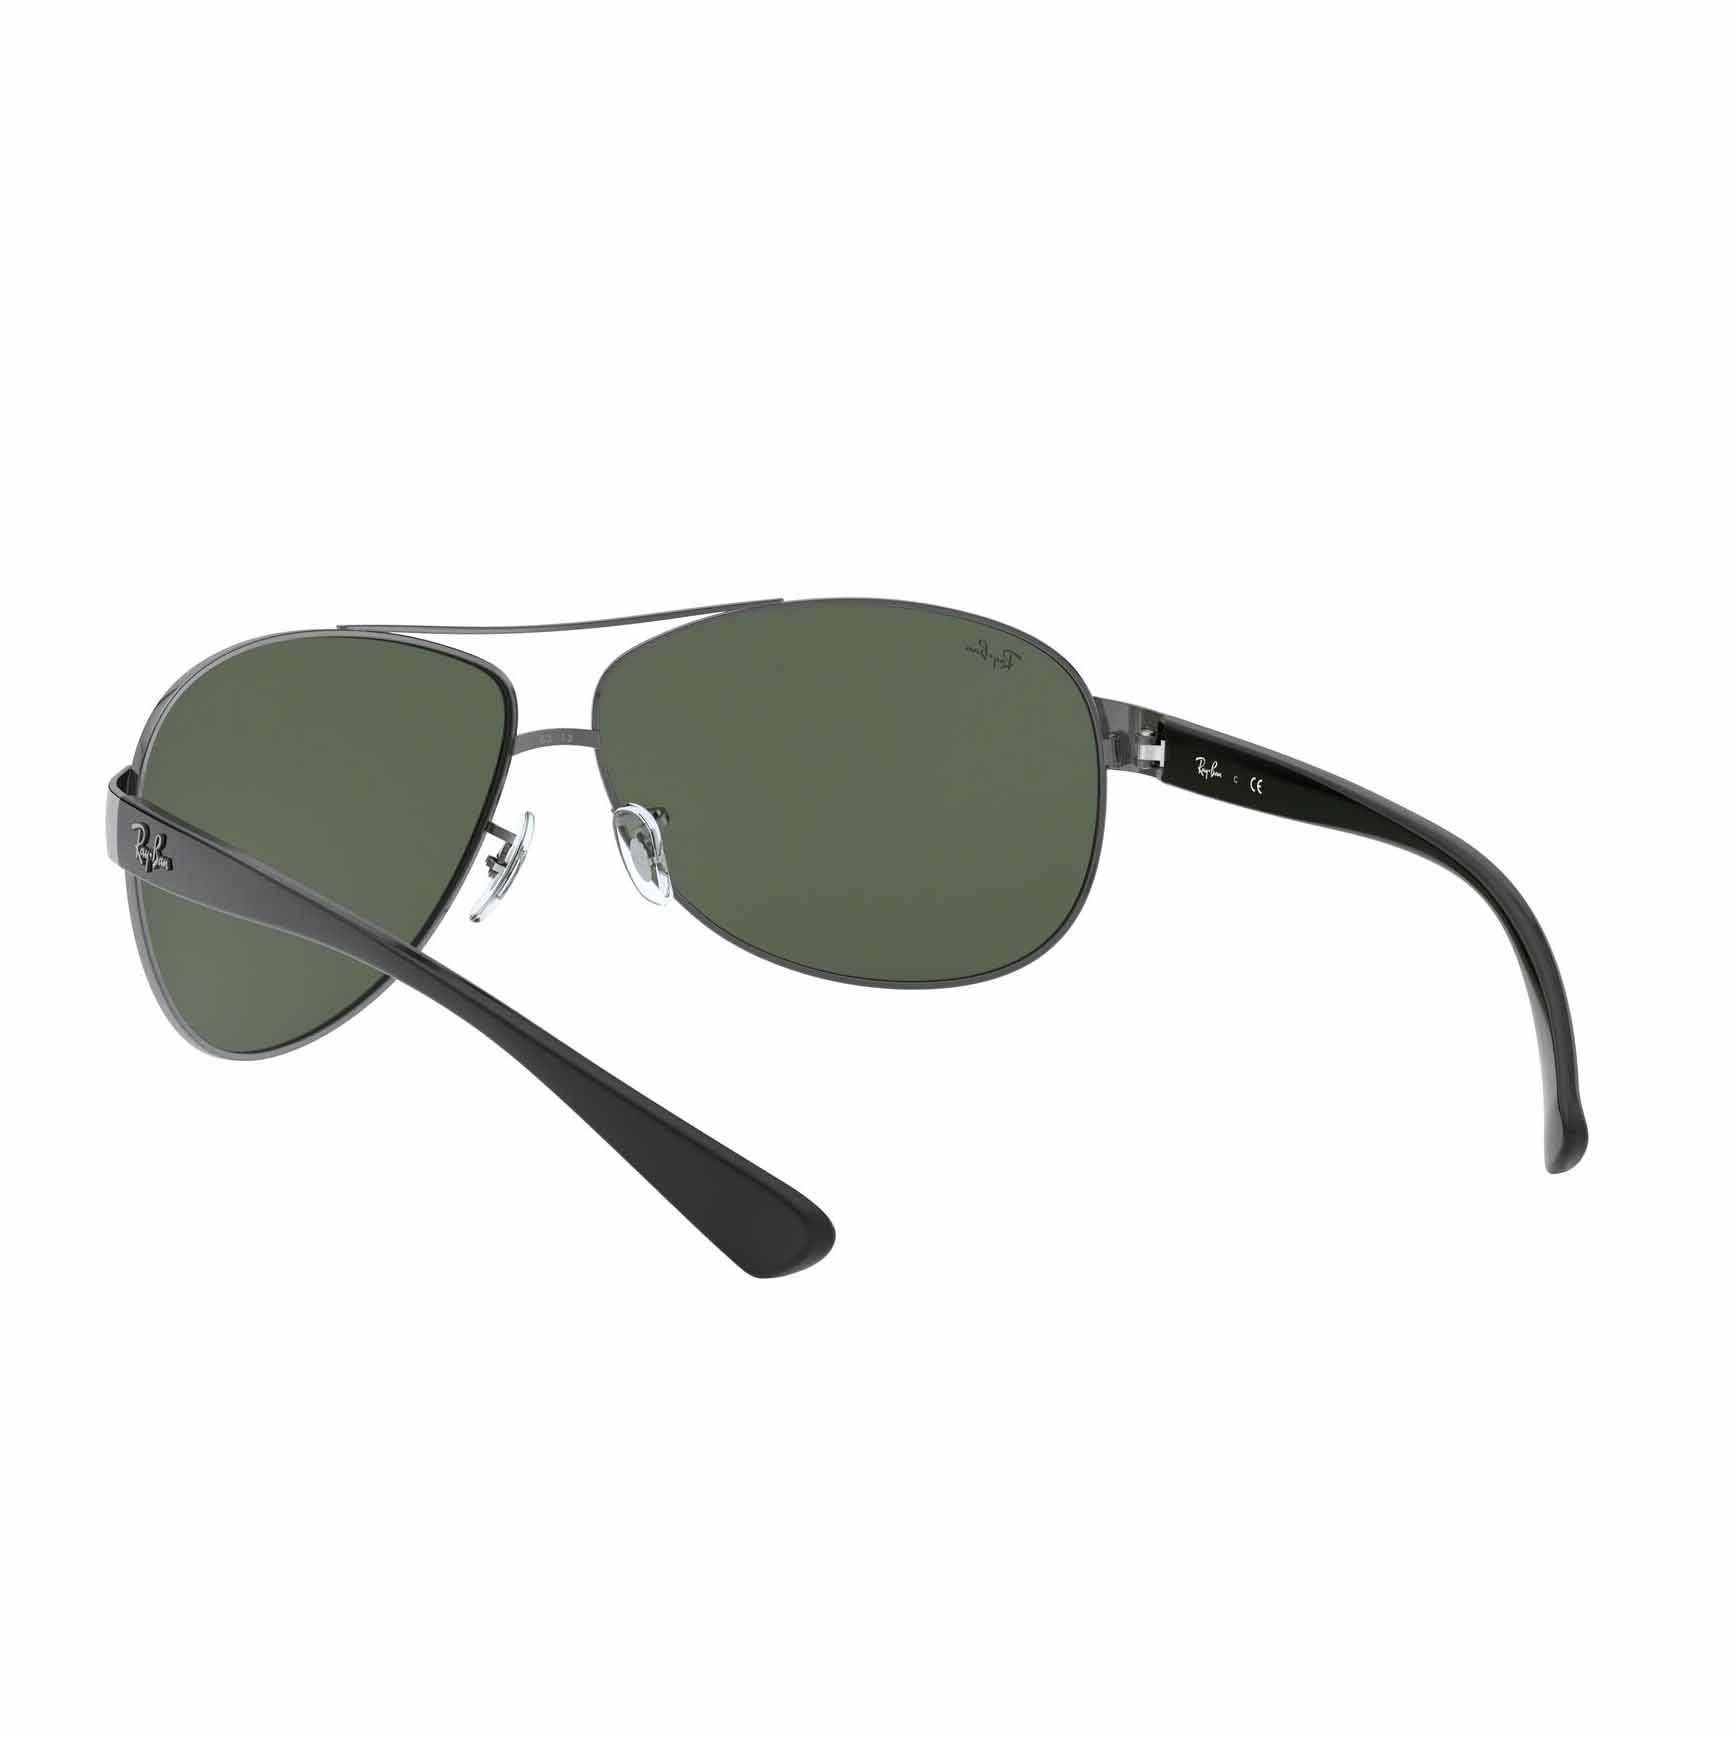 Co Ray-Ban TOX Sunglasses RB3386 004/71 67 GUNMETAL/DARK GREEN